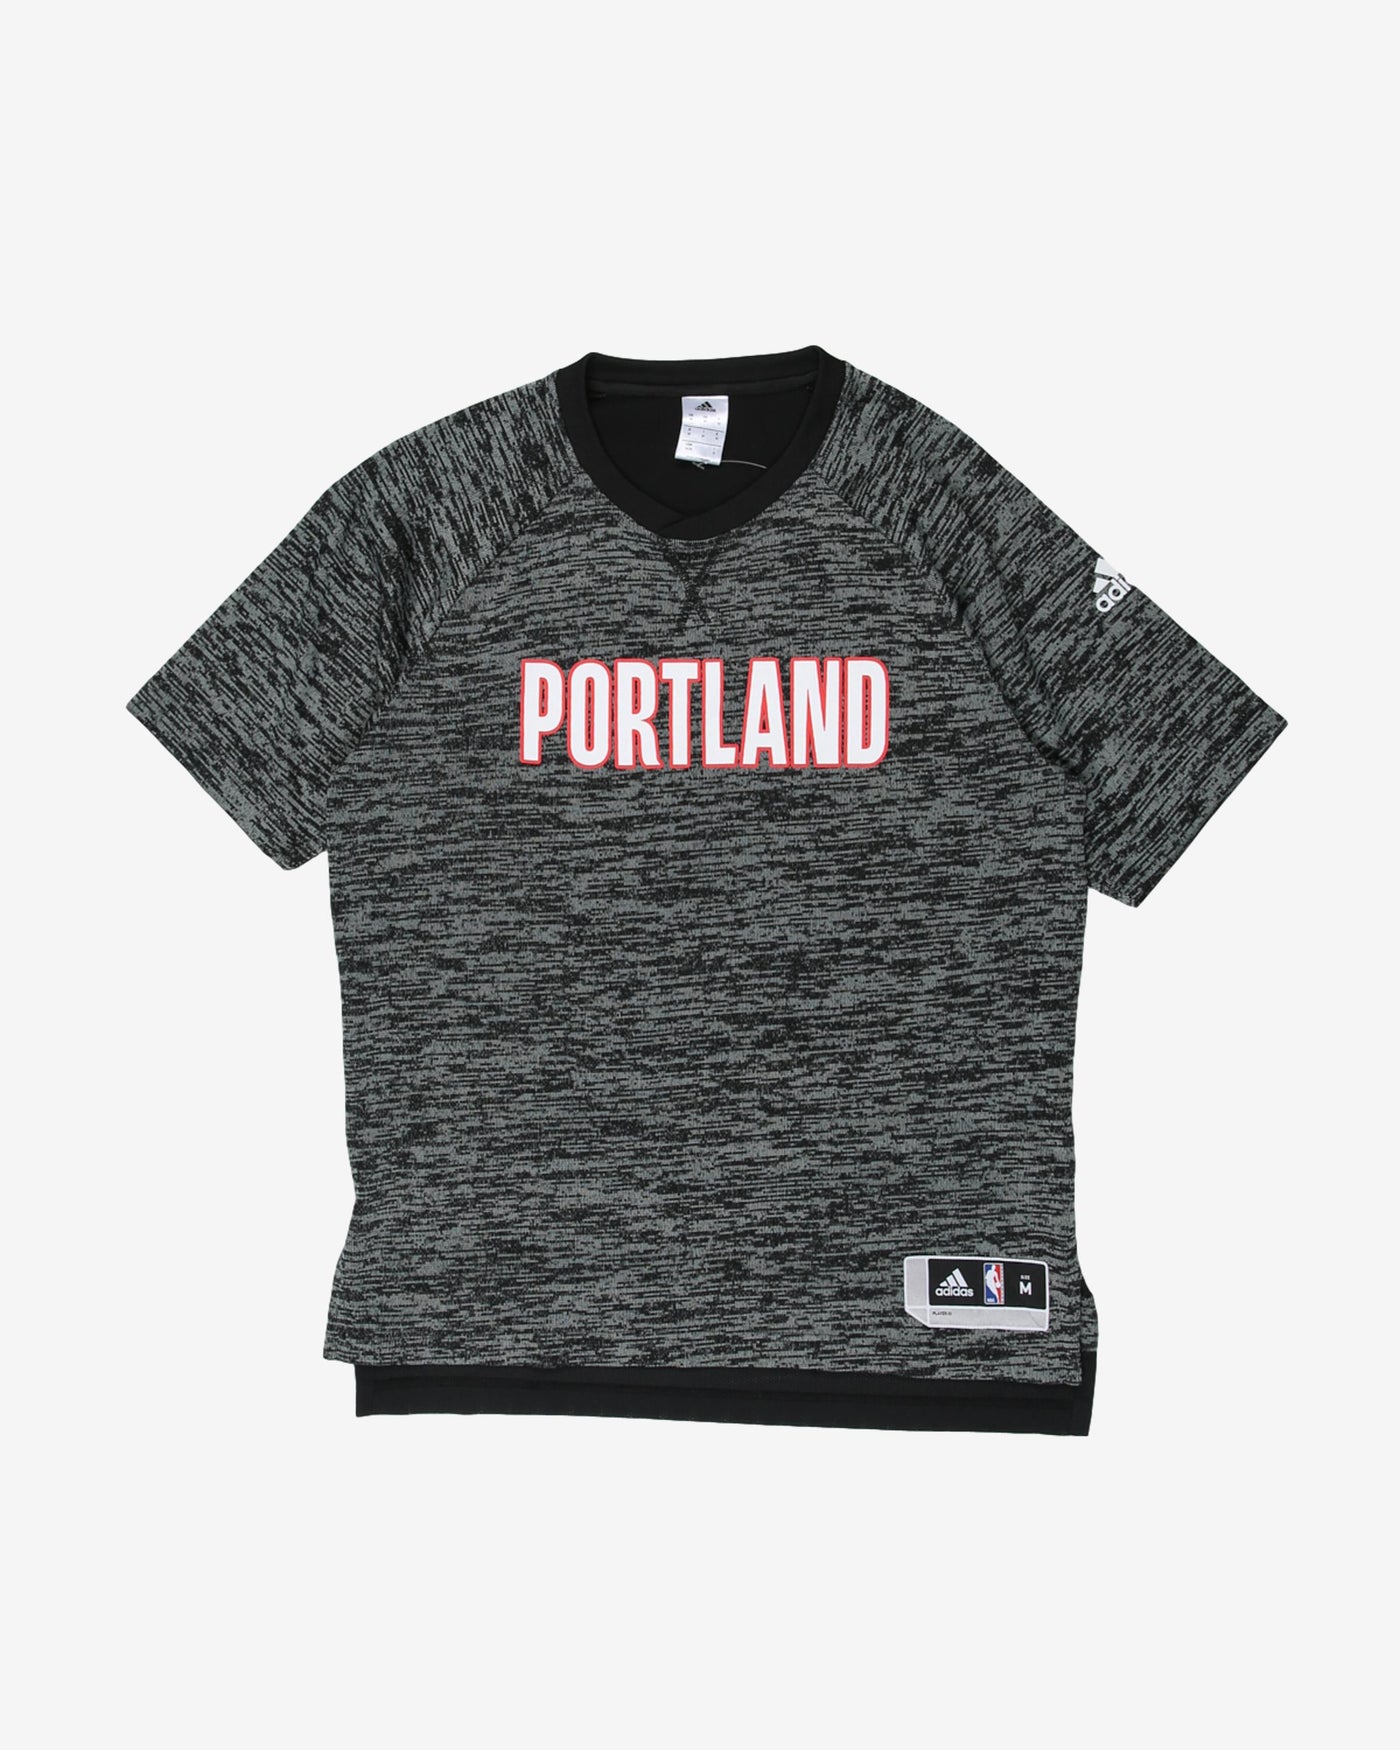 Adidas Portland t-shirt - M